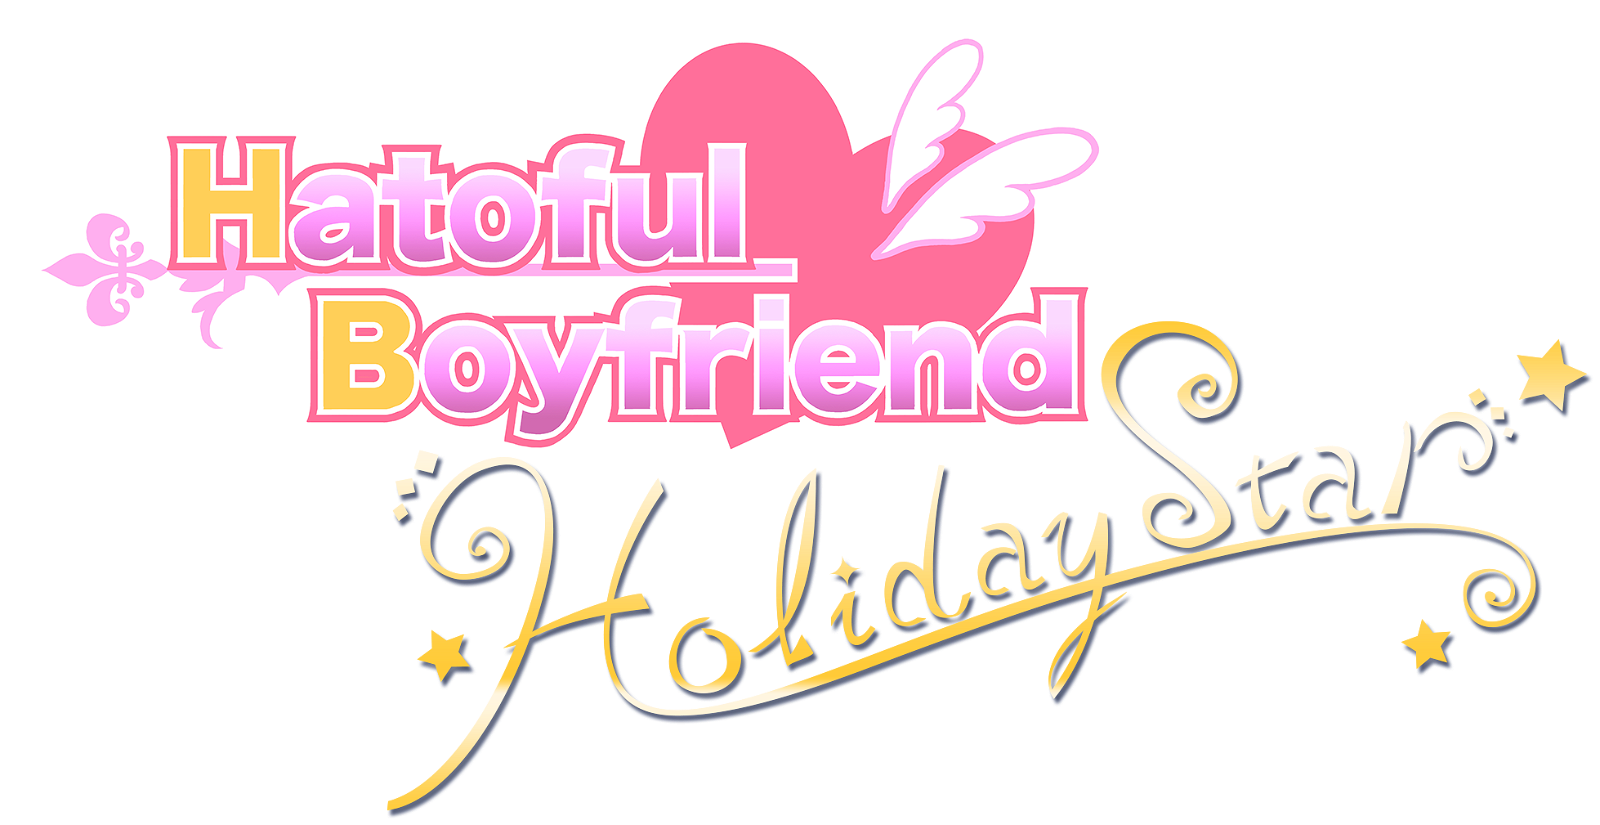 Image of Hatoful Boyfriend: Holiday Star